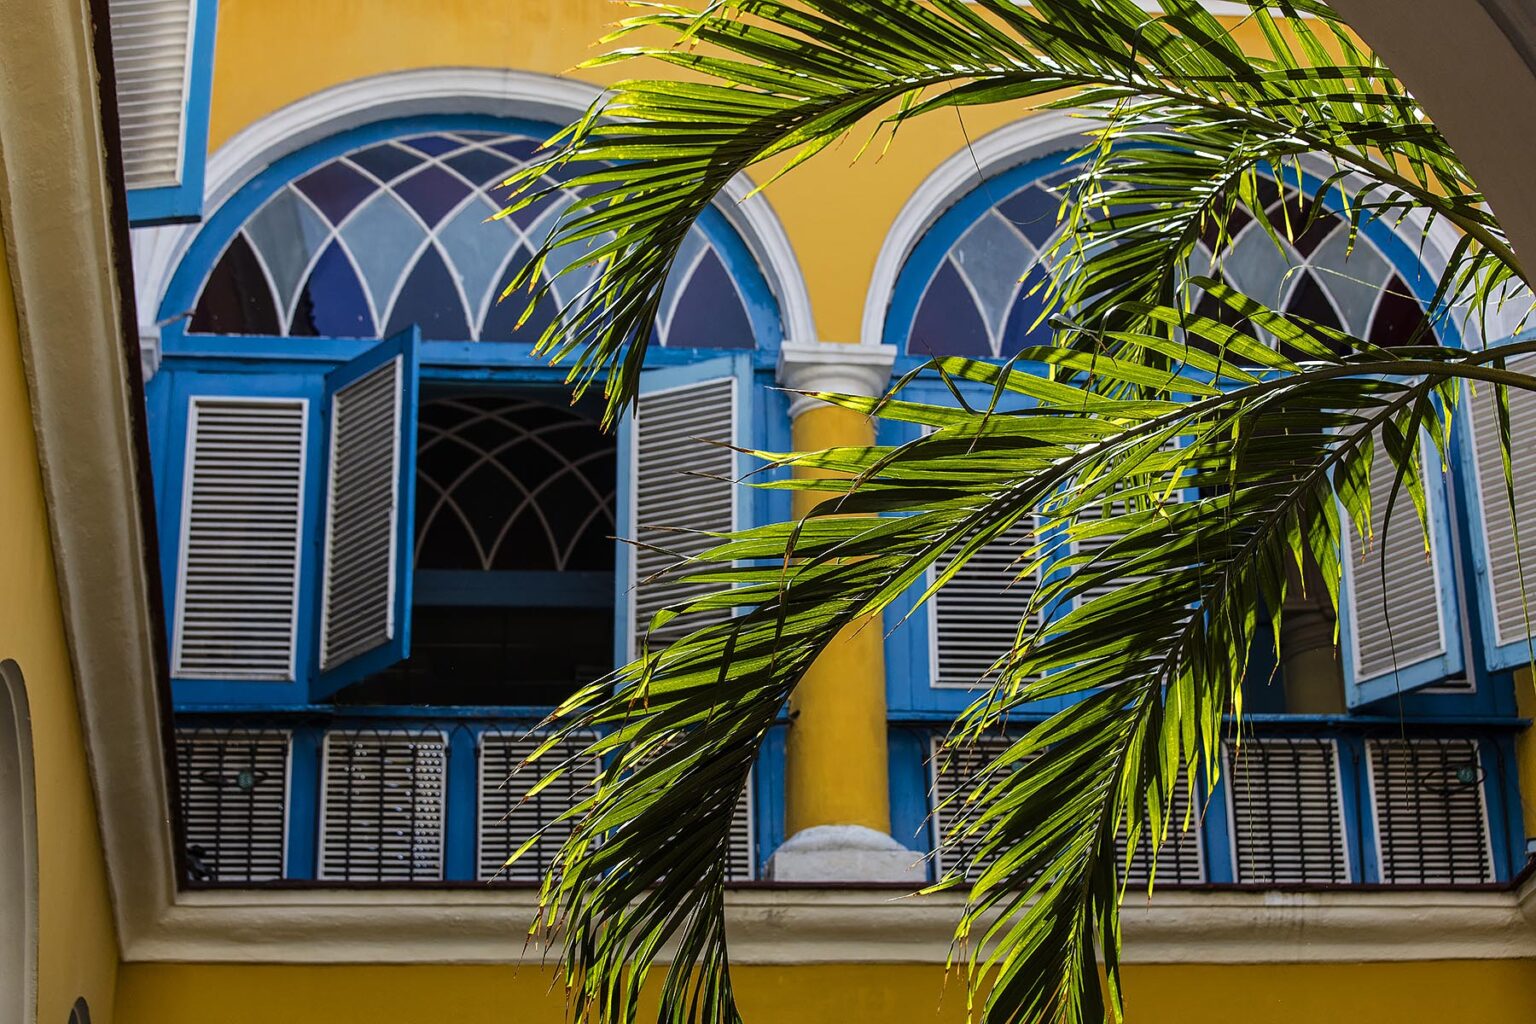 Historical architecture graces much of HABANA VIEJA  - HAVANA, CUBA